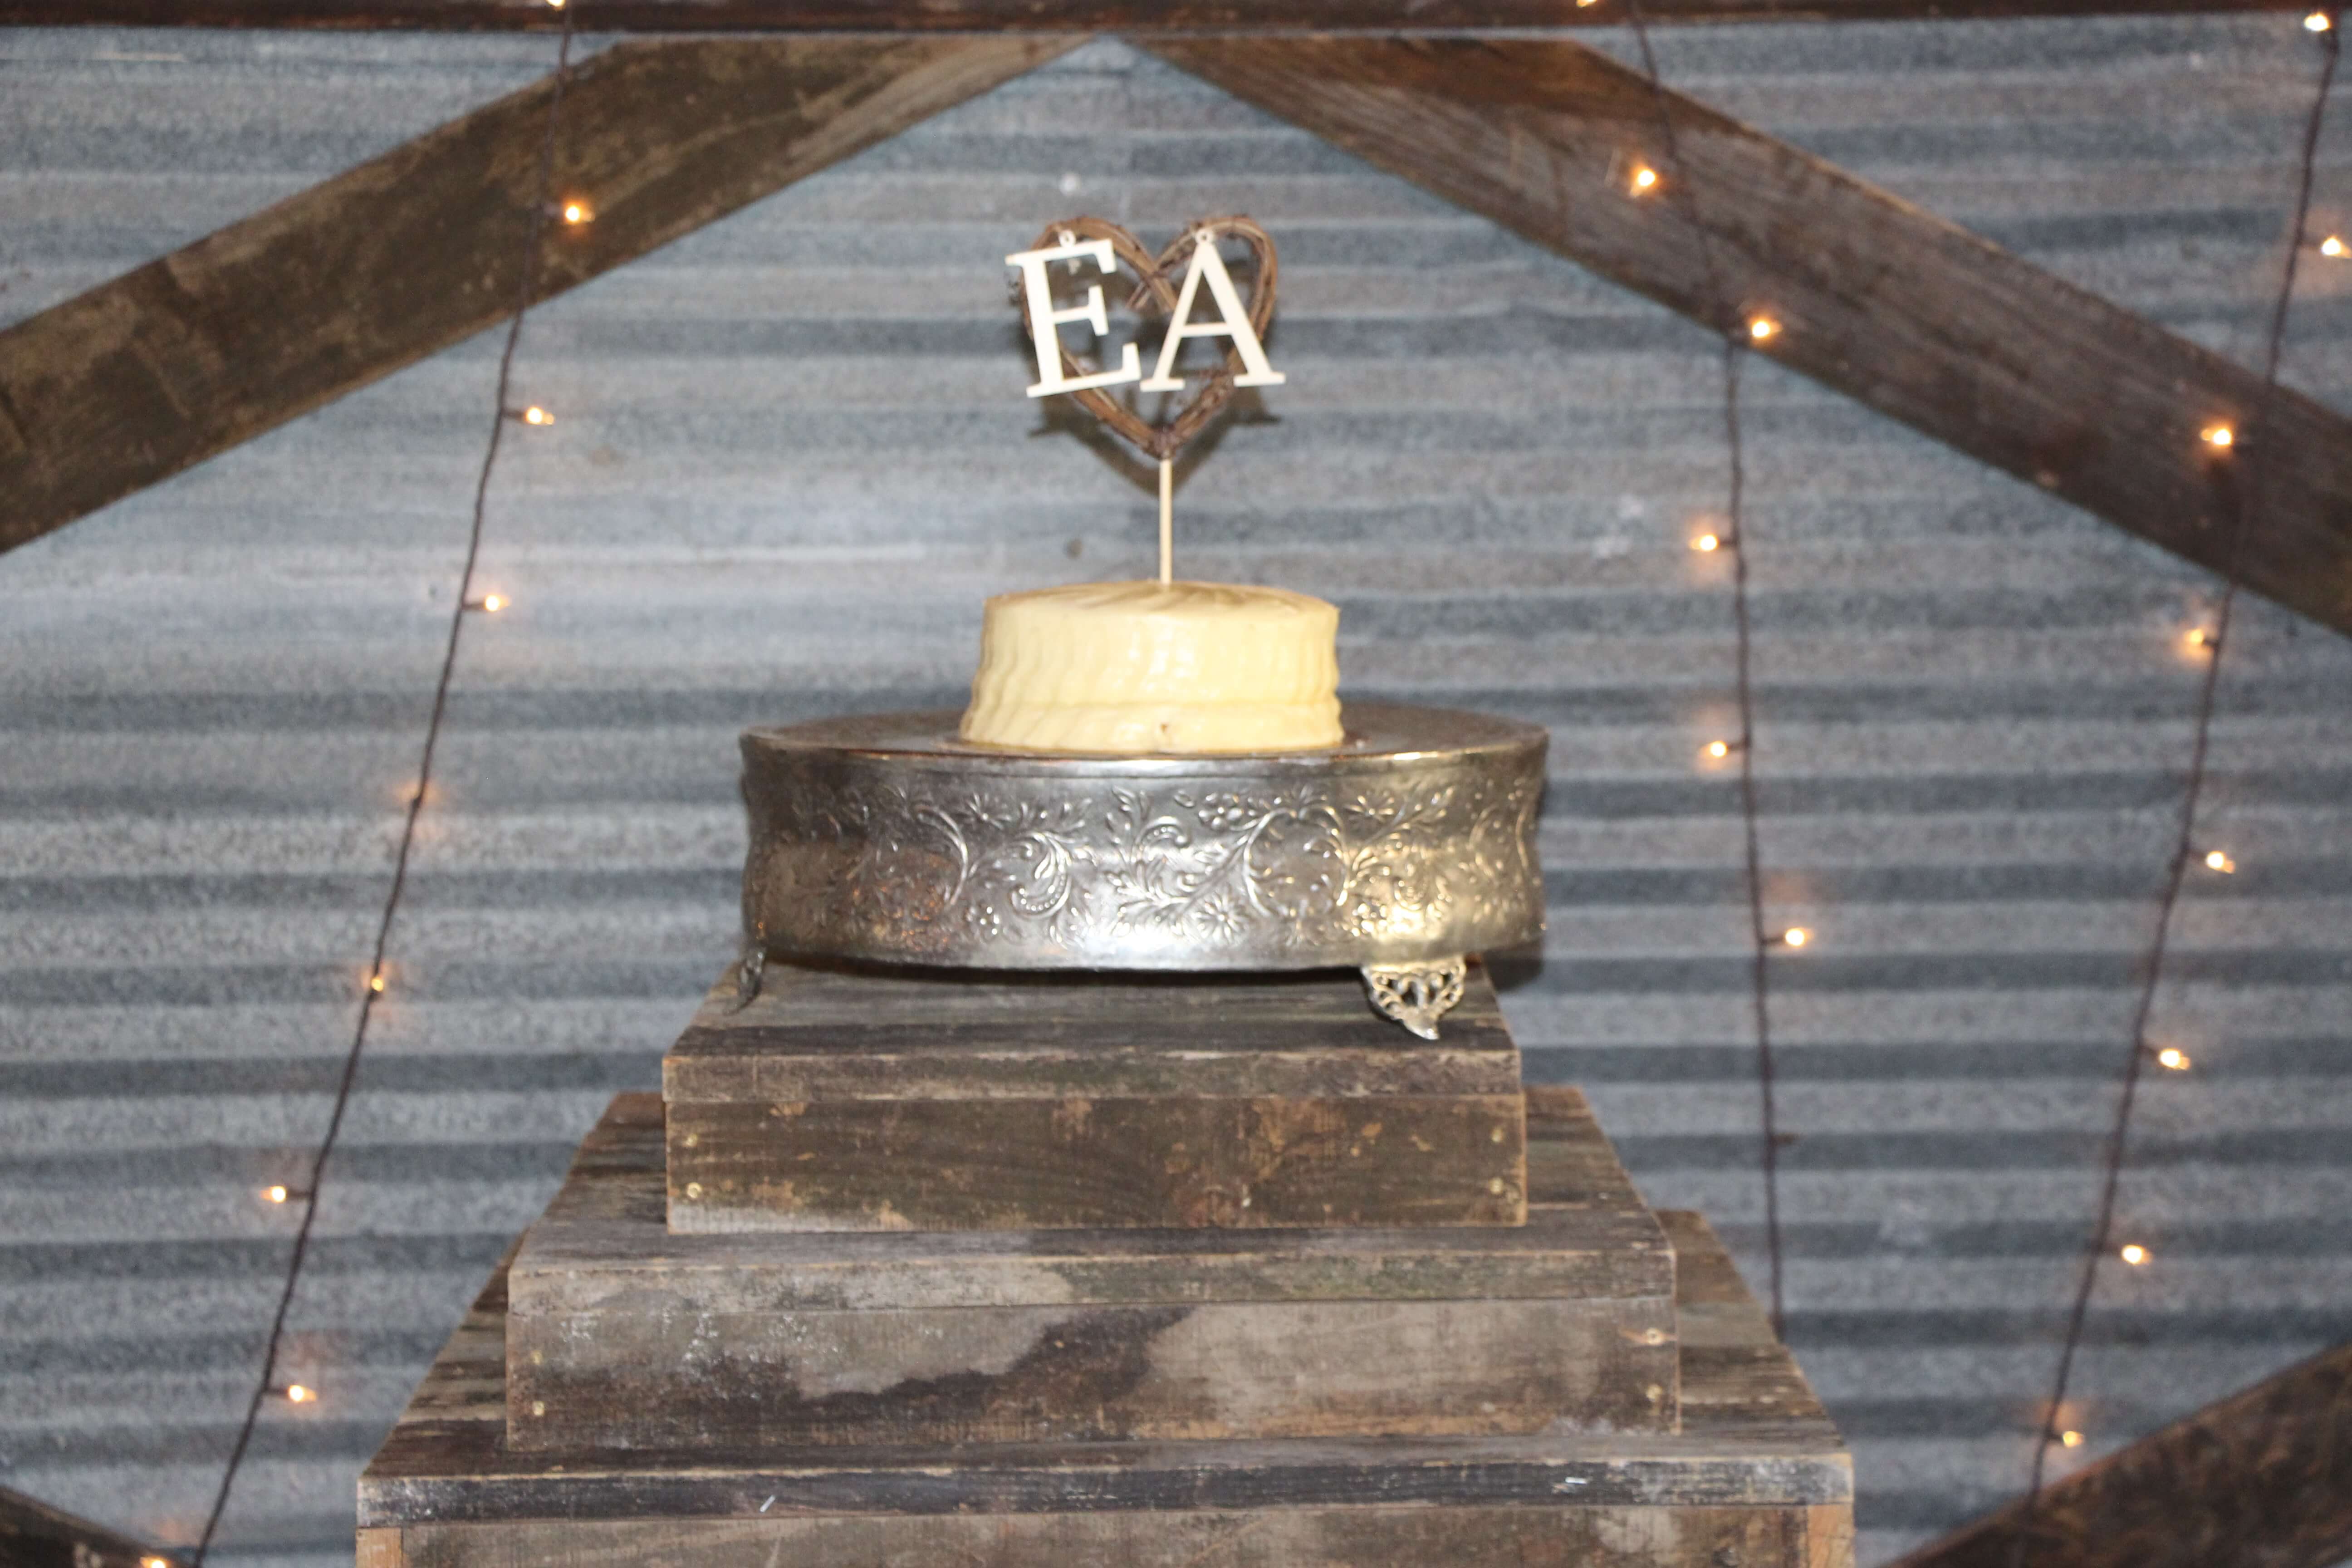 Konopa Wedding Cake at 3M Ranch and Events